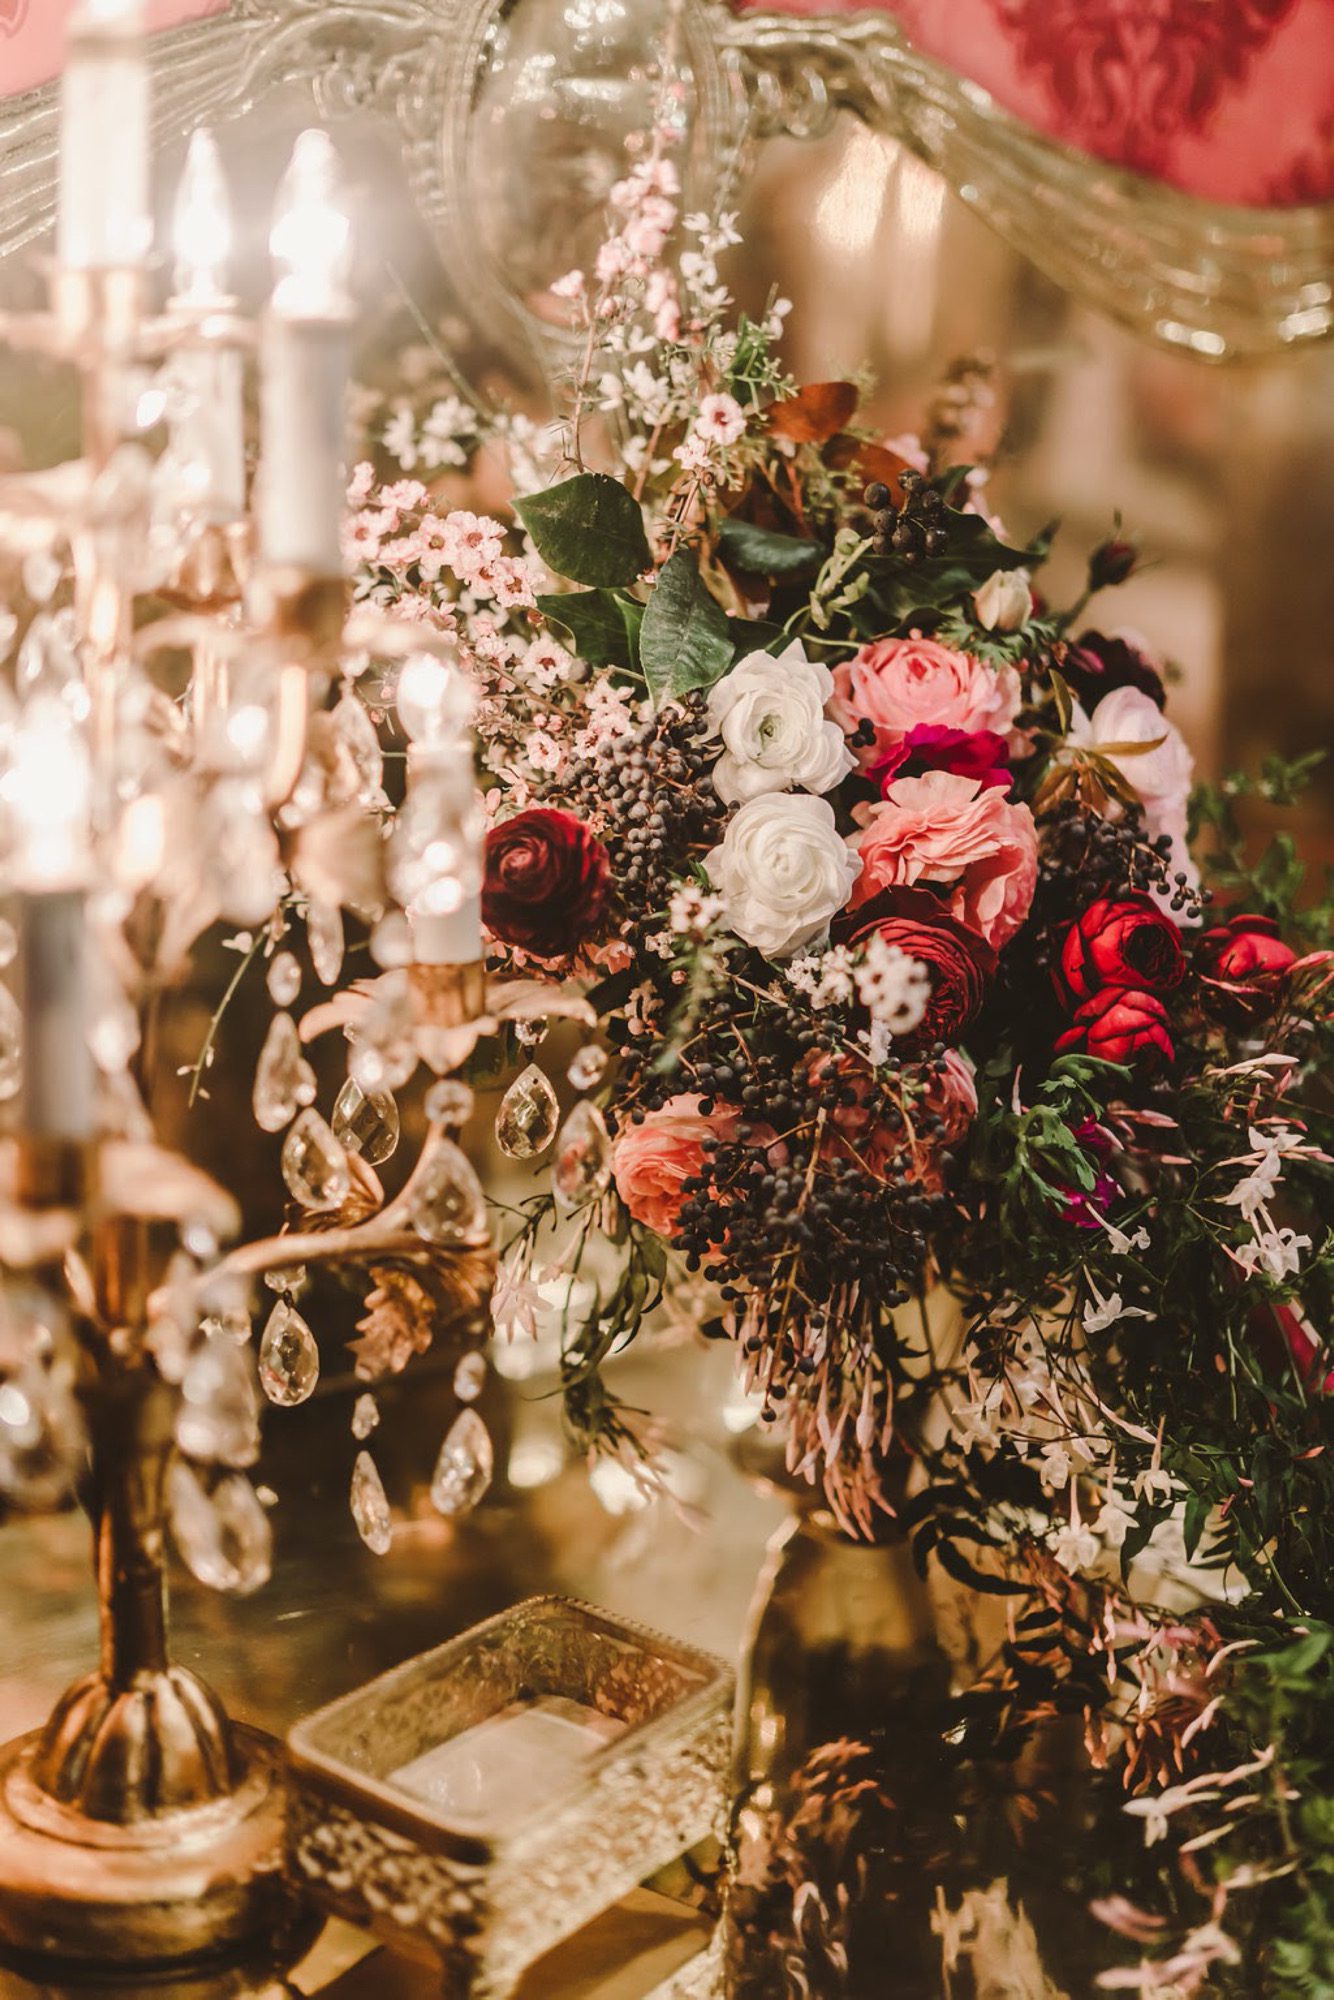 Vintage blooms in antique brass vessels by arroyo grande wedding planner Sandcastle Celebrations